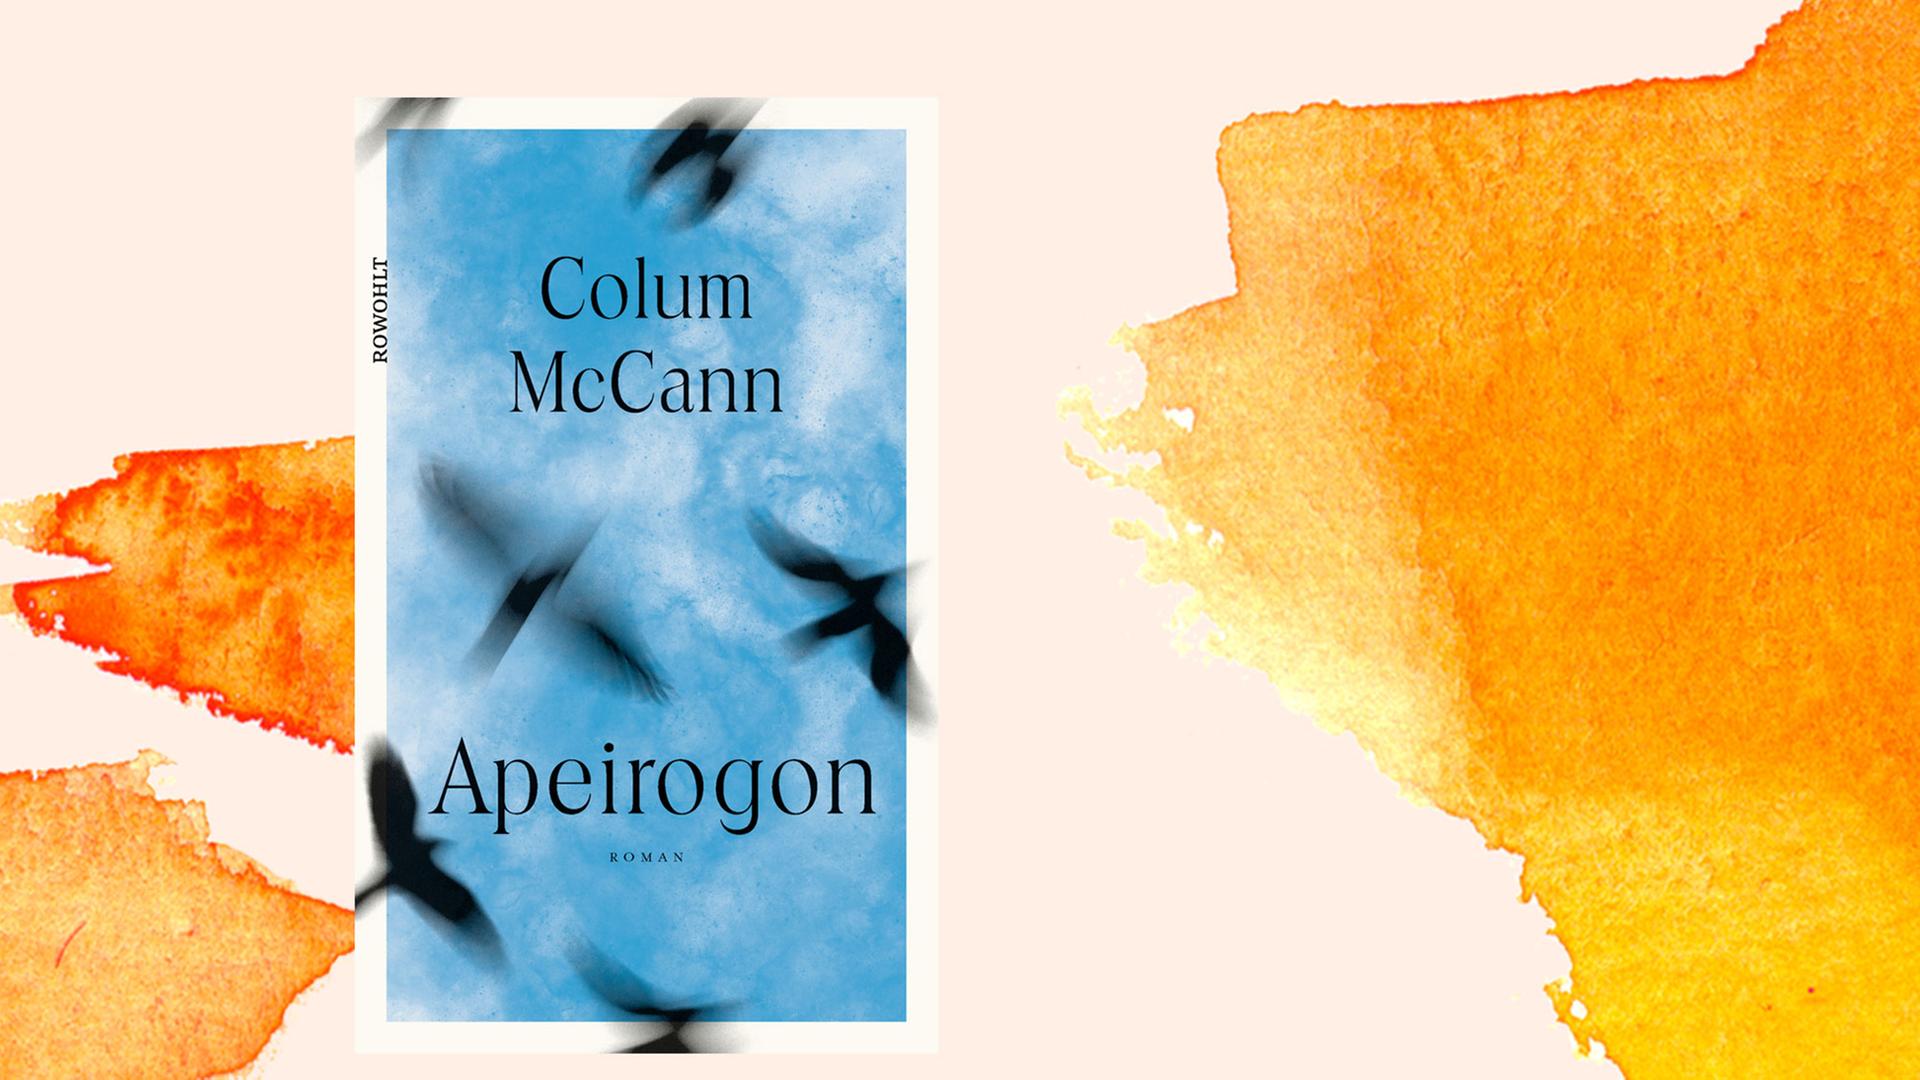 Buchcover des Romans "Apeirogon" von Colum McCann